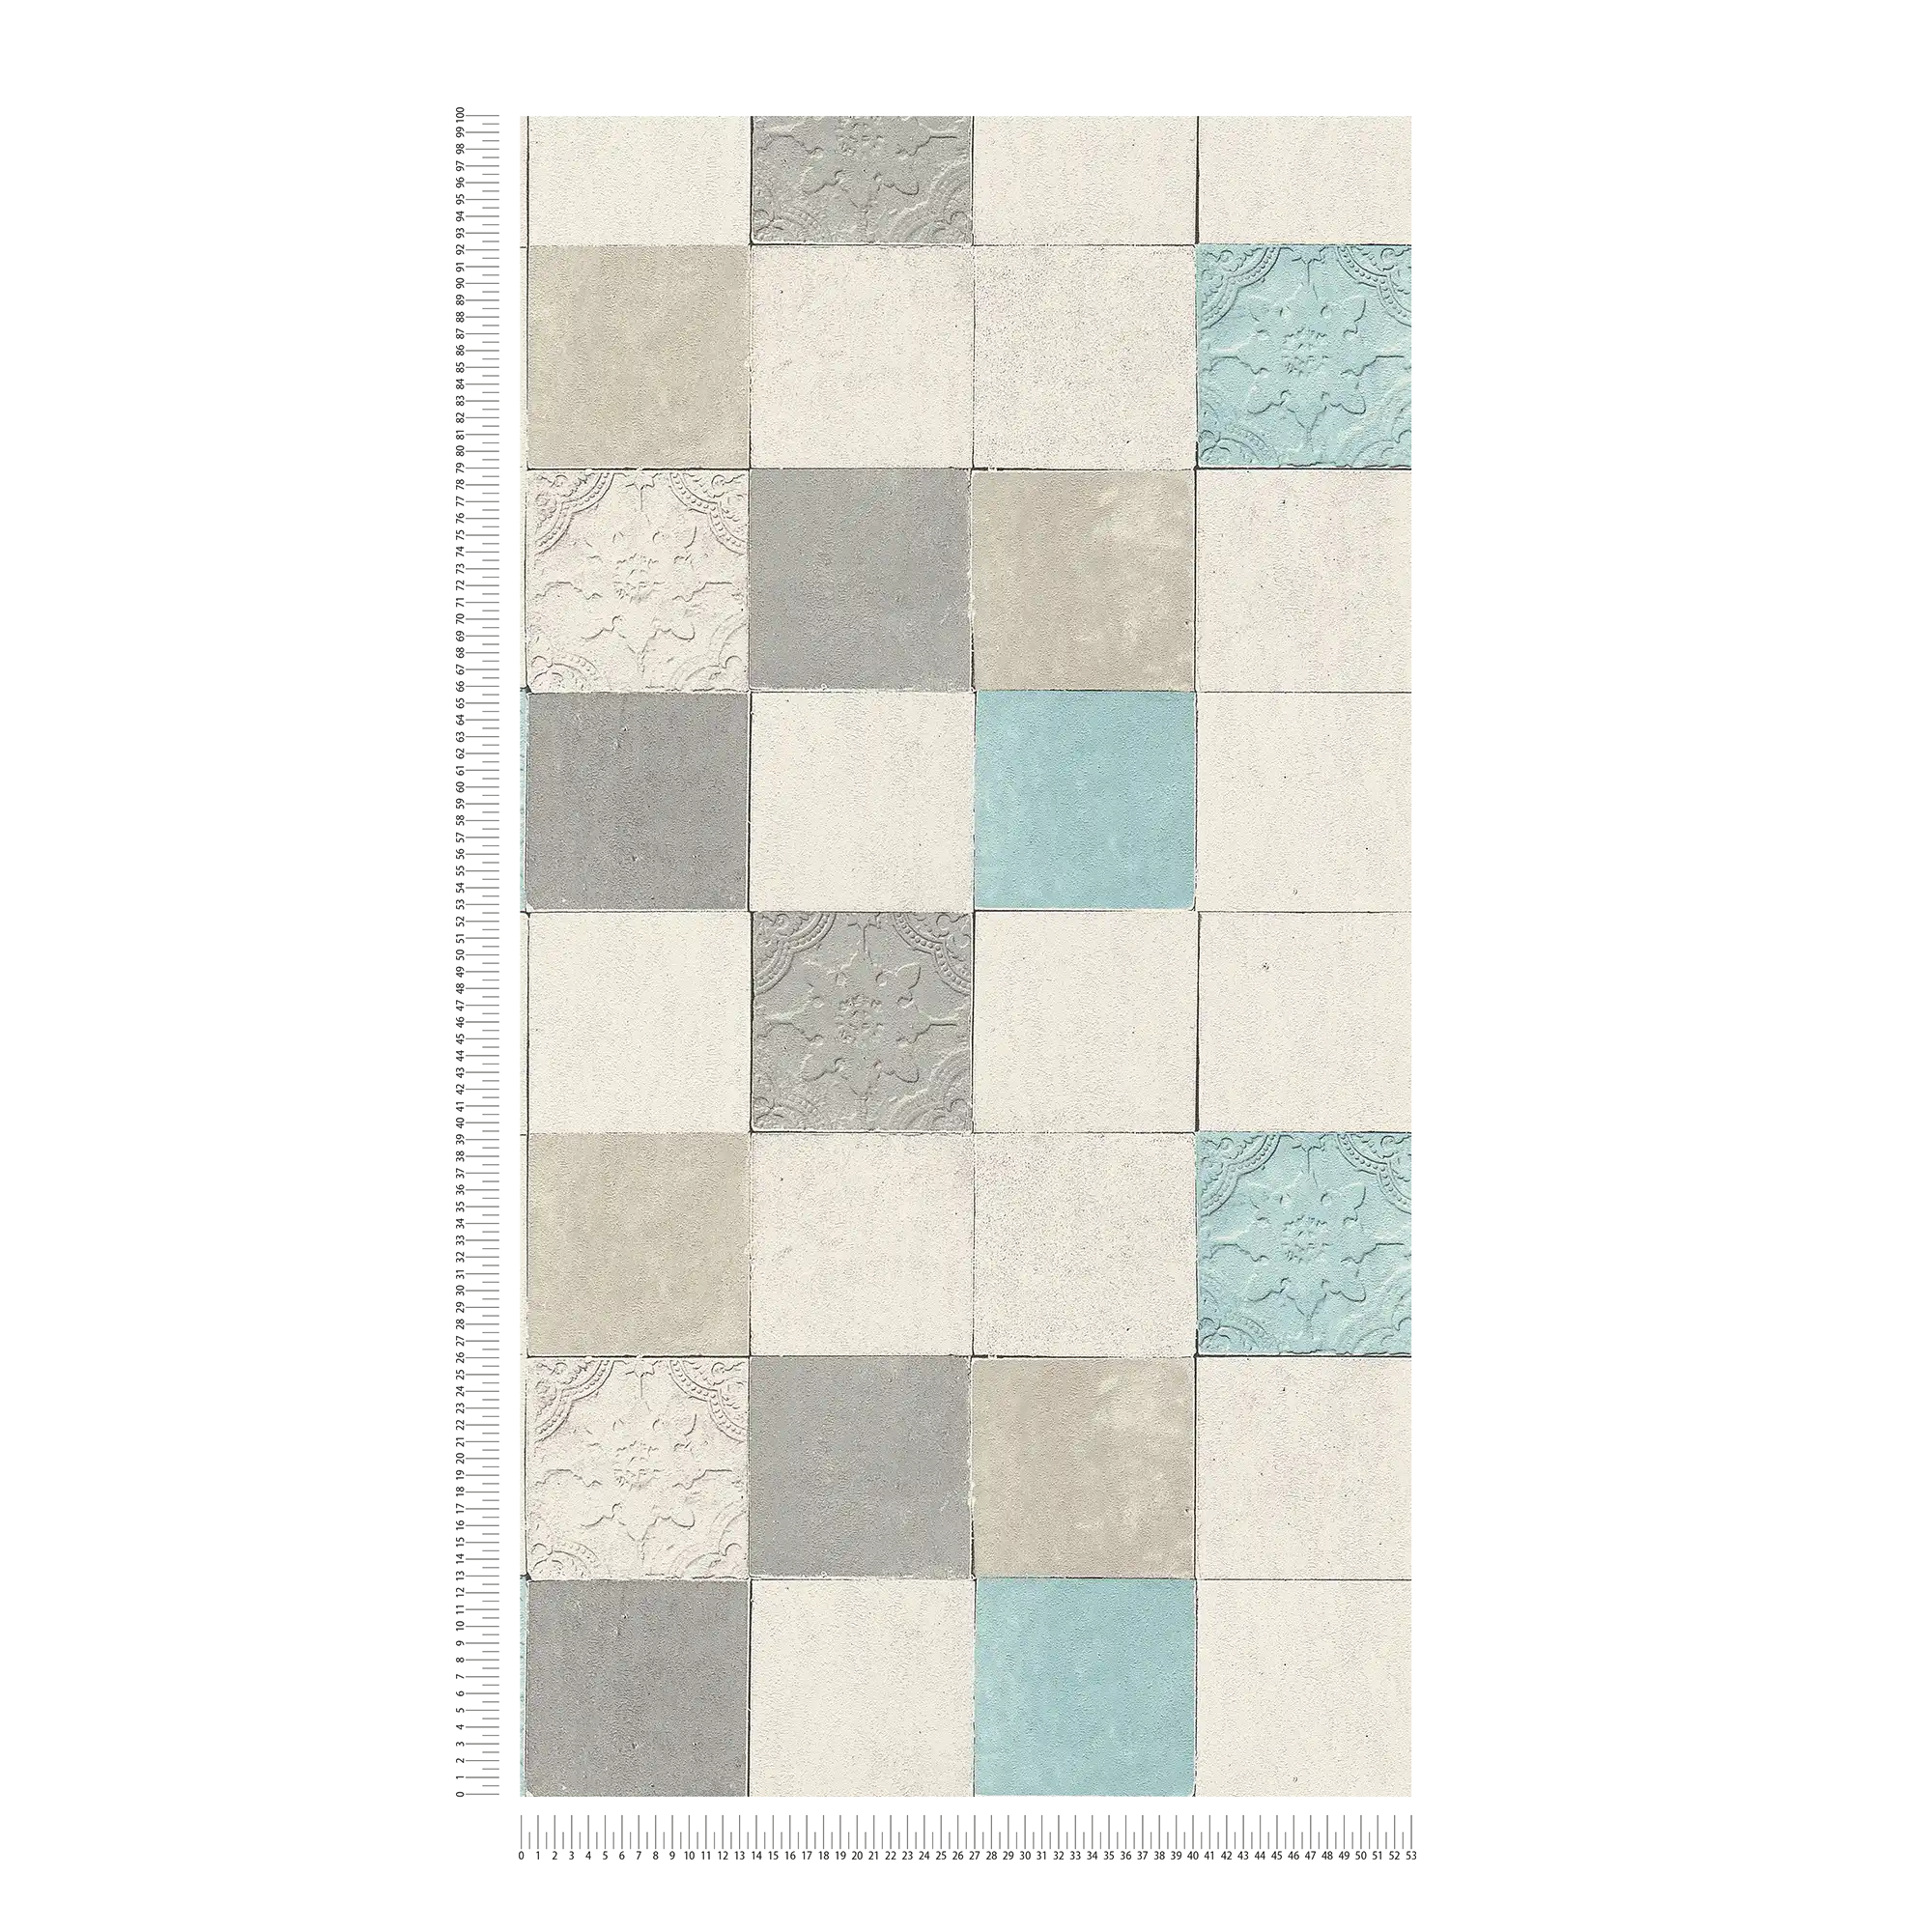             Carta da parati decorativa a mosaico - grigio, blu, crema
        